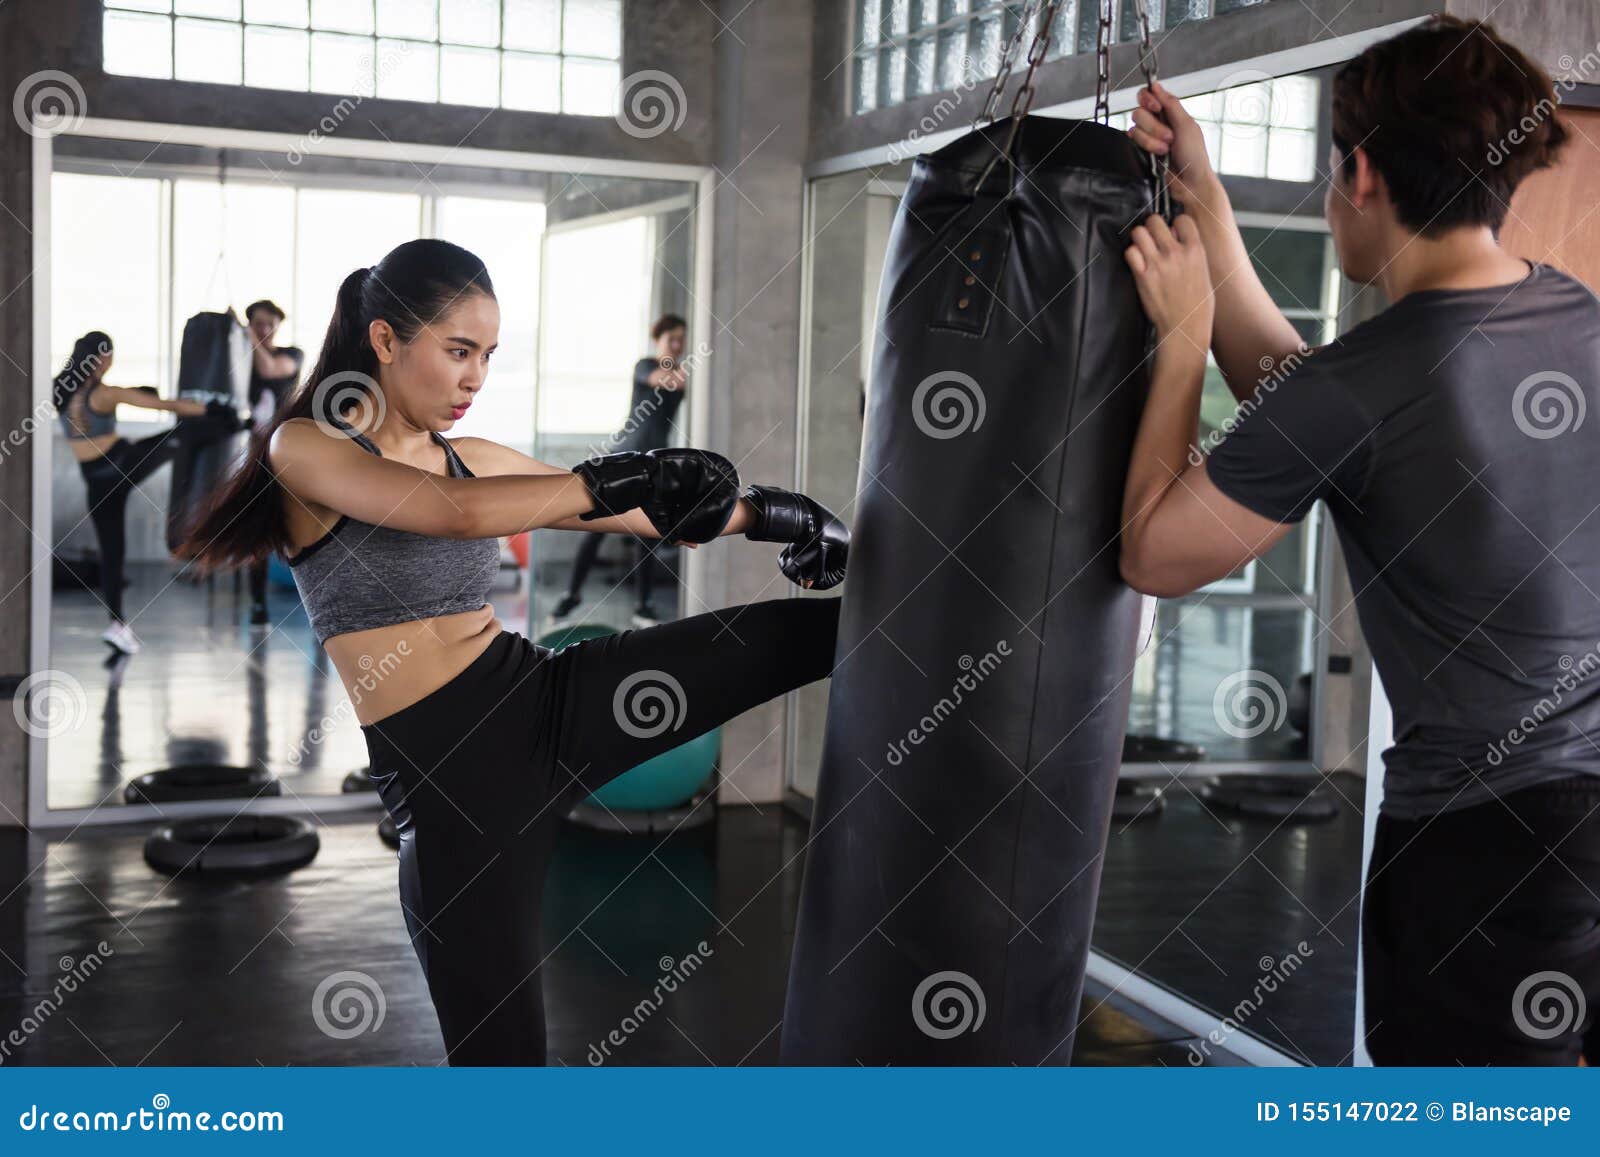 muay thai training in fitness gym